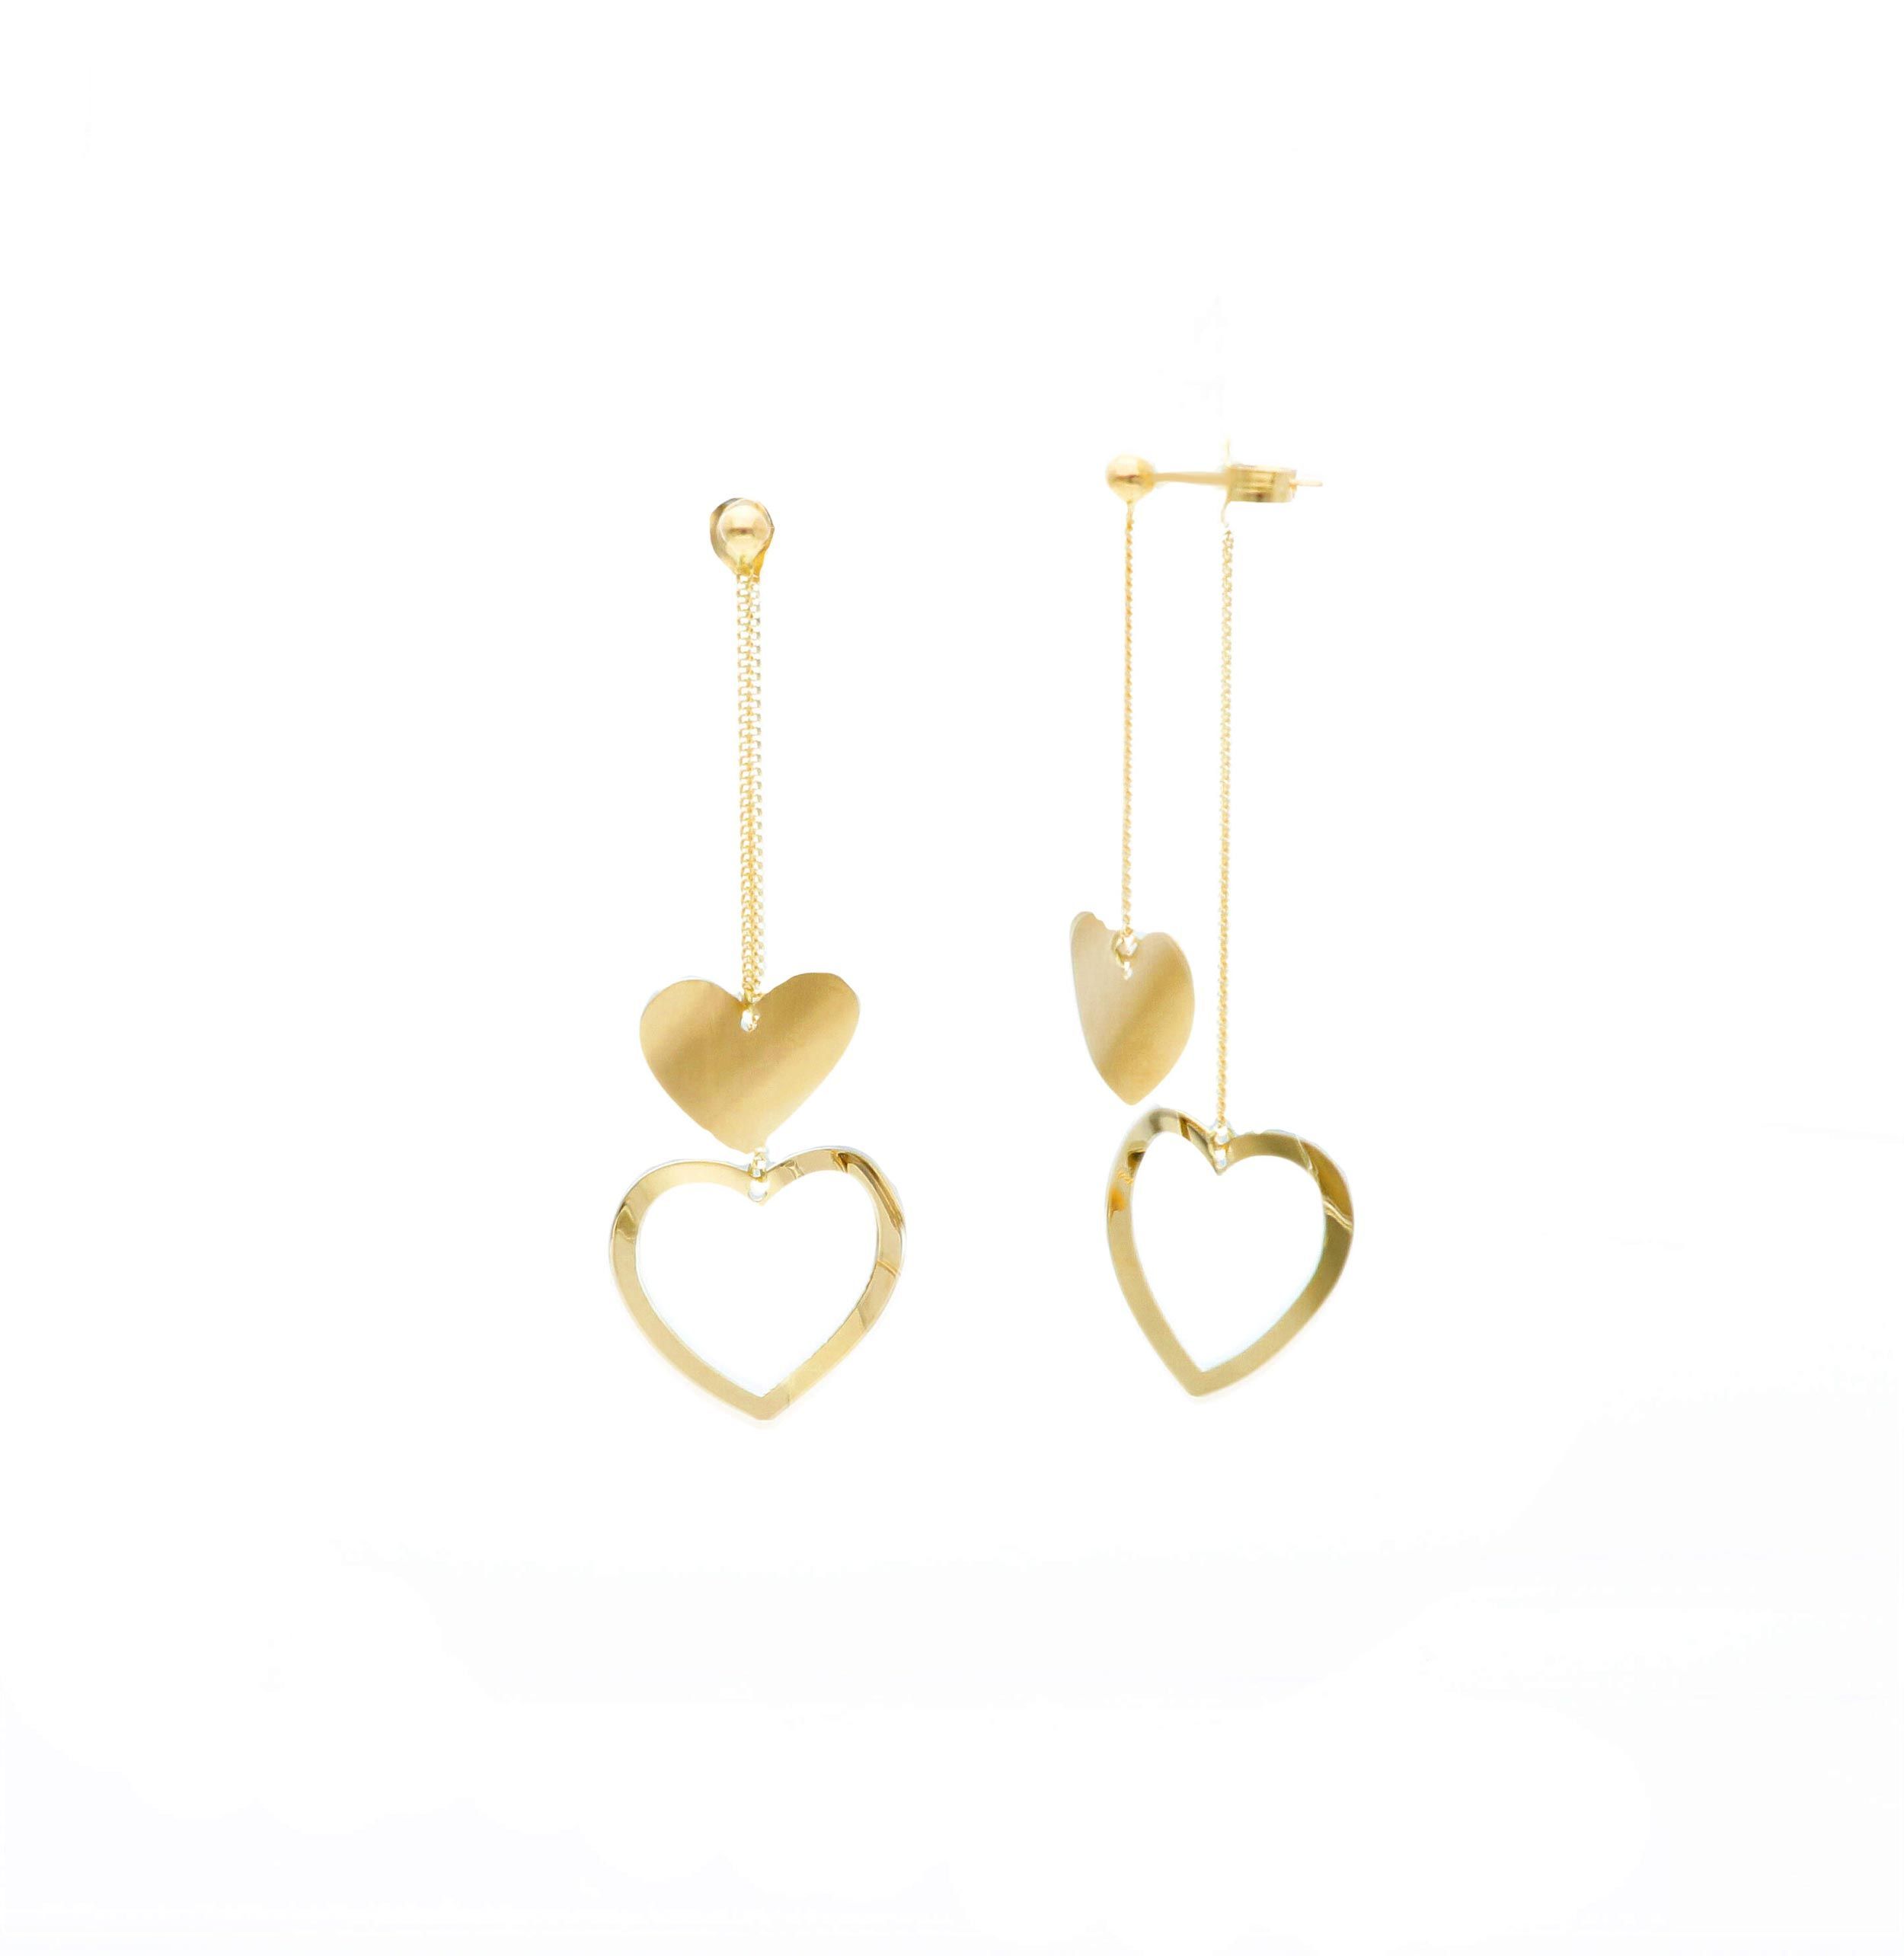 Golden earrings 14k with hearts (code S245974)